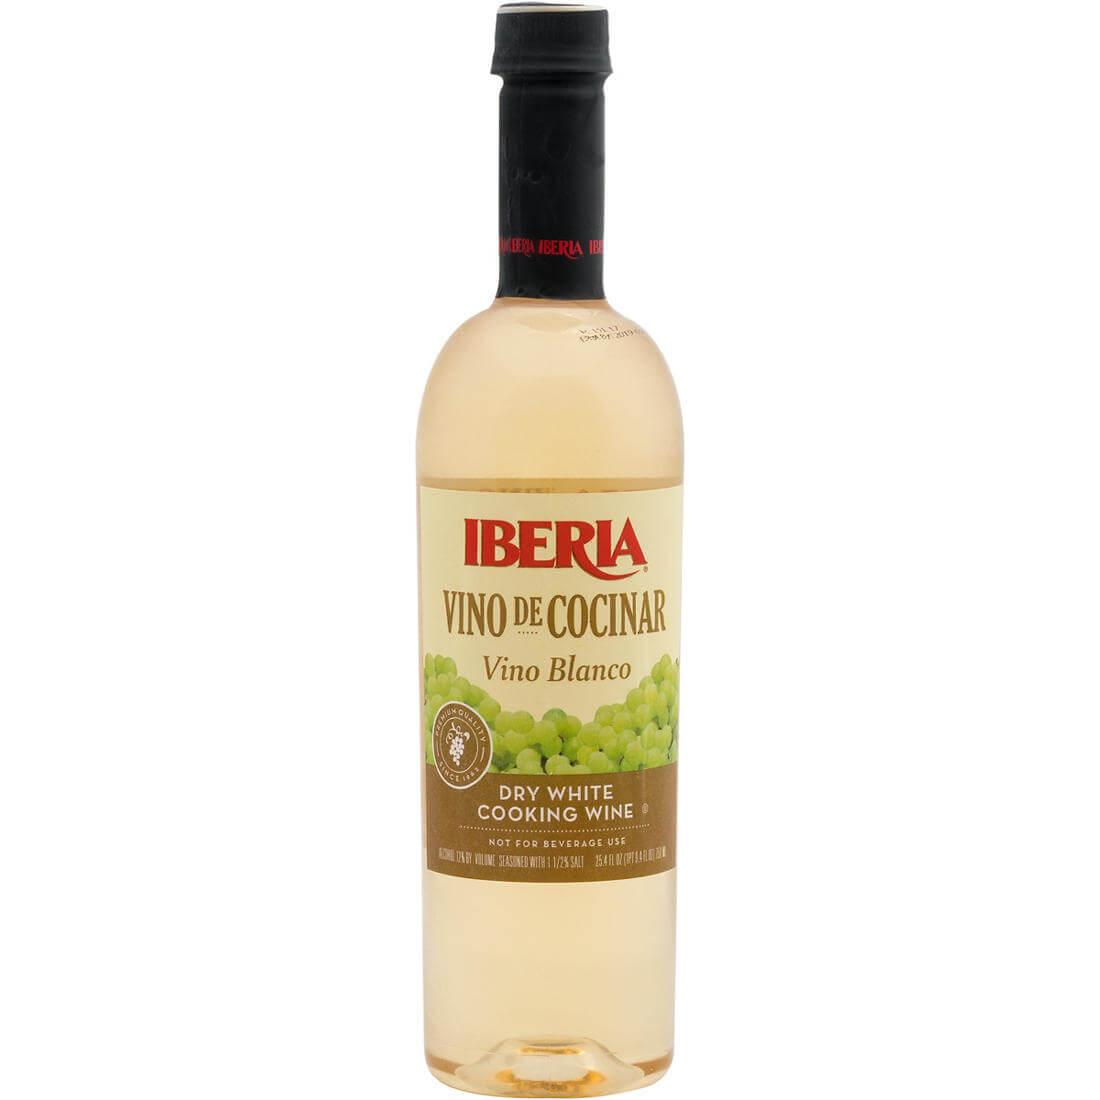 Iberia - Dry White Cooking Wine 12% Alcohol Volume, 25.4oz